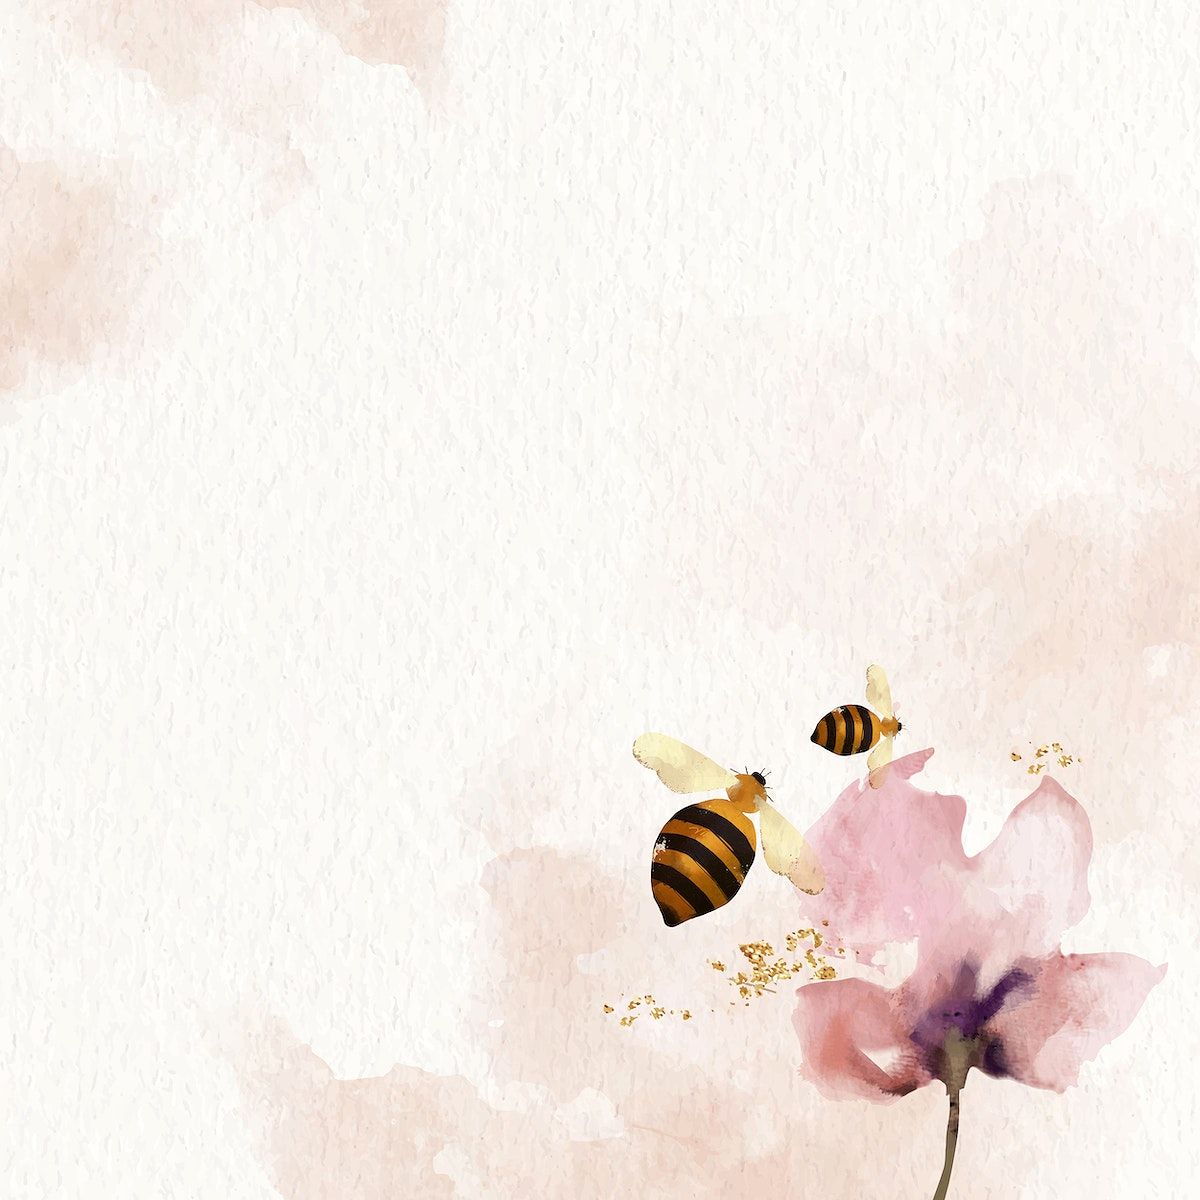 Honey Bee Illustration Image Wallpaper